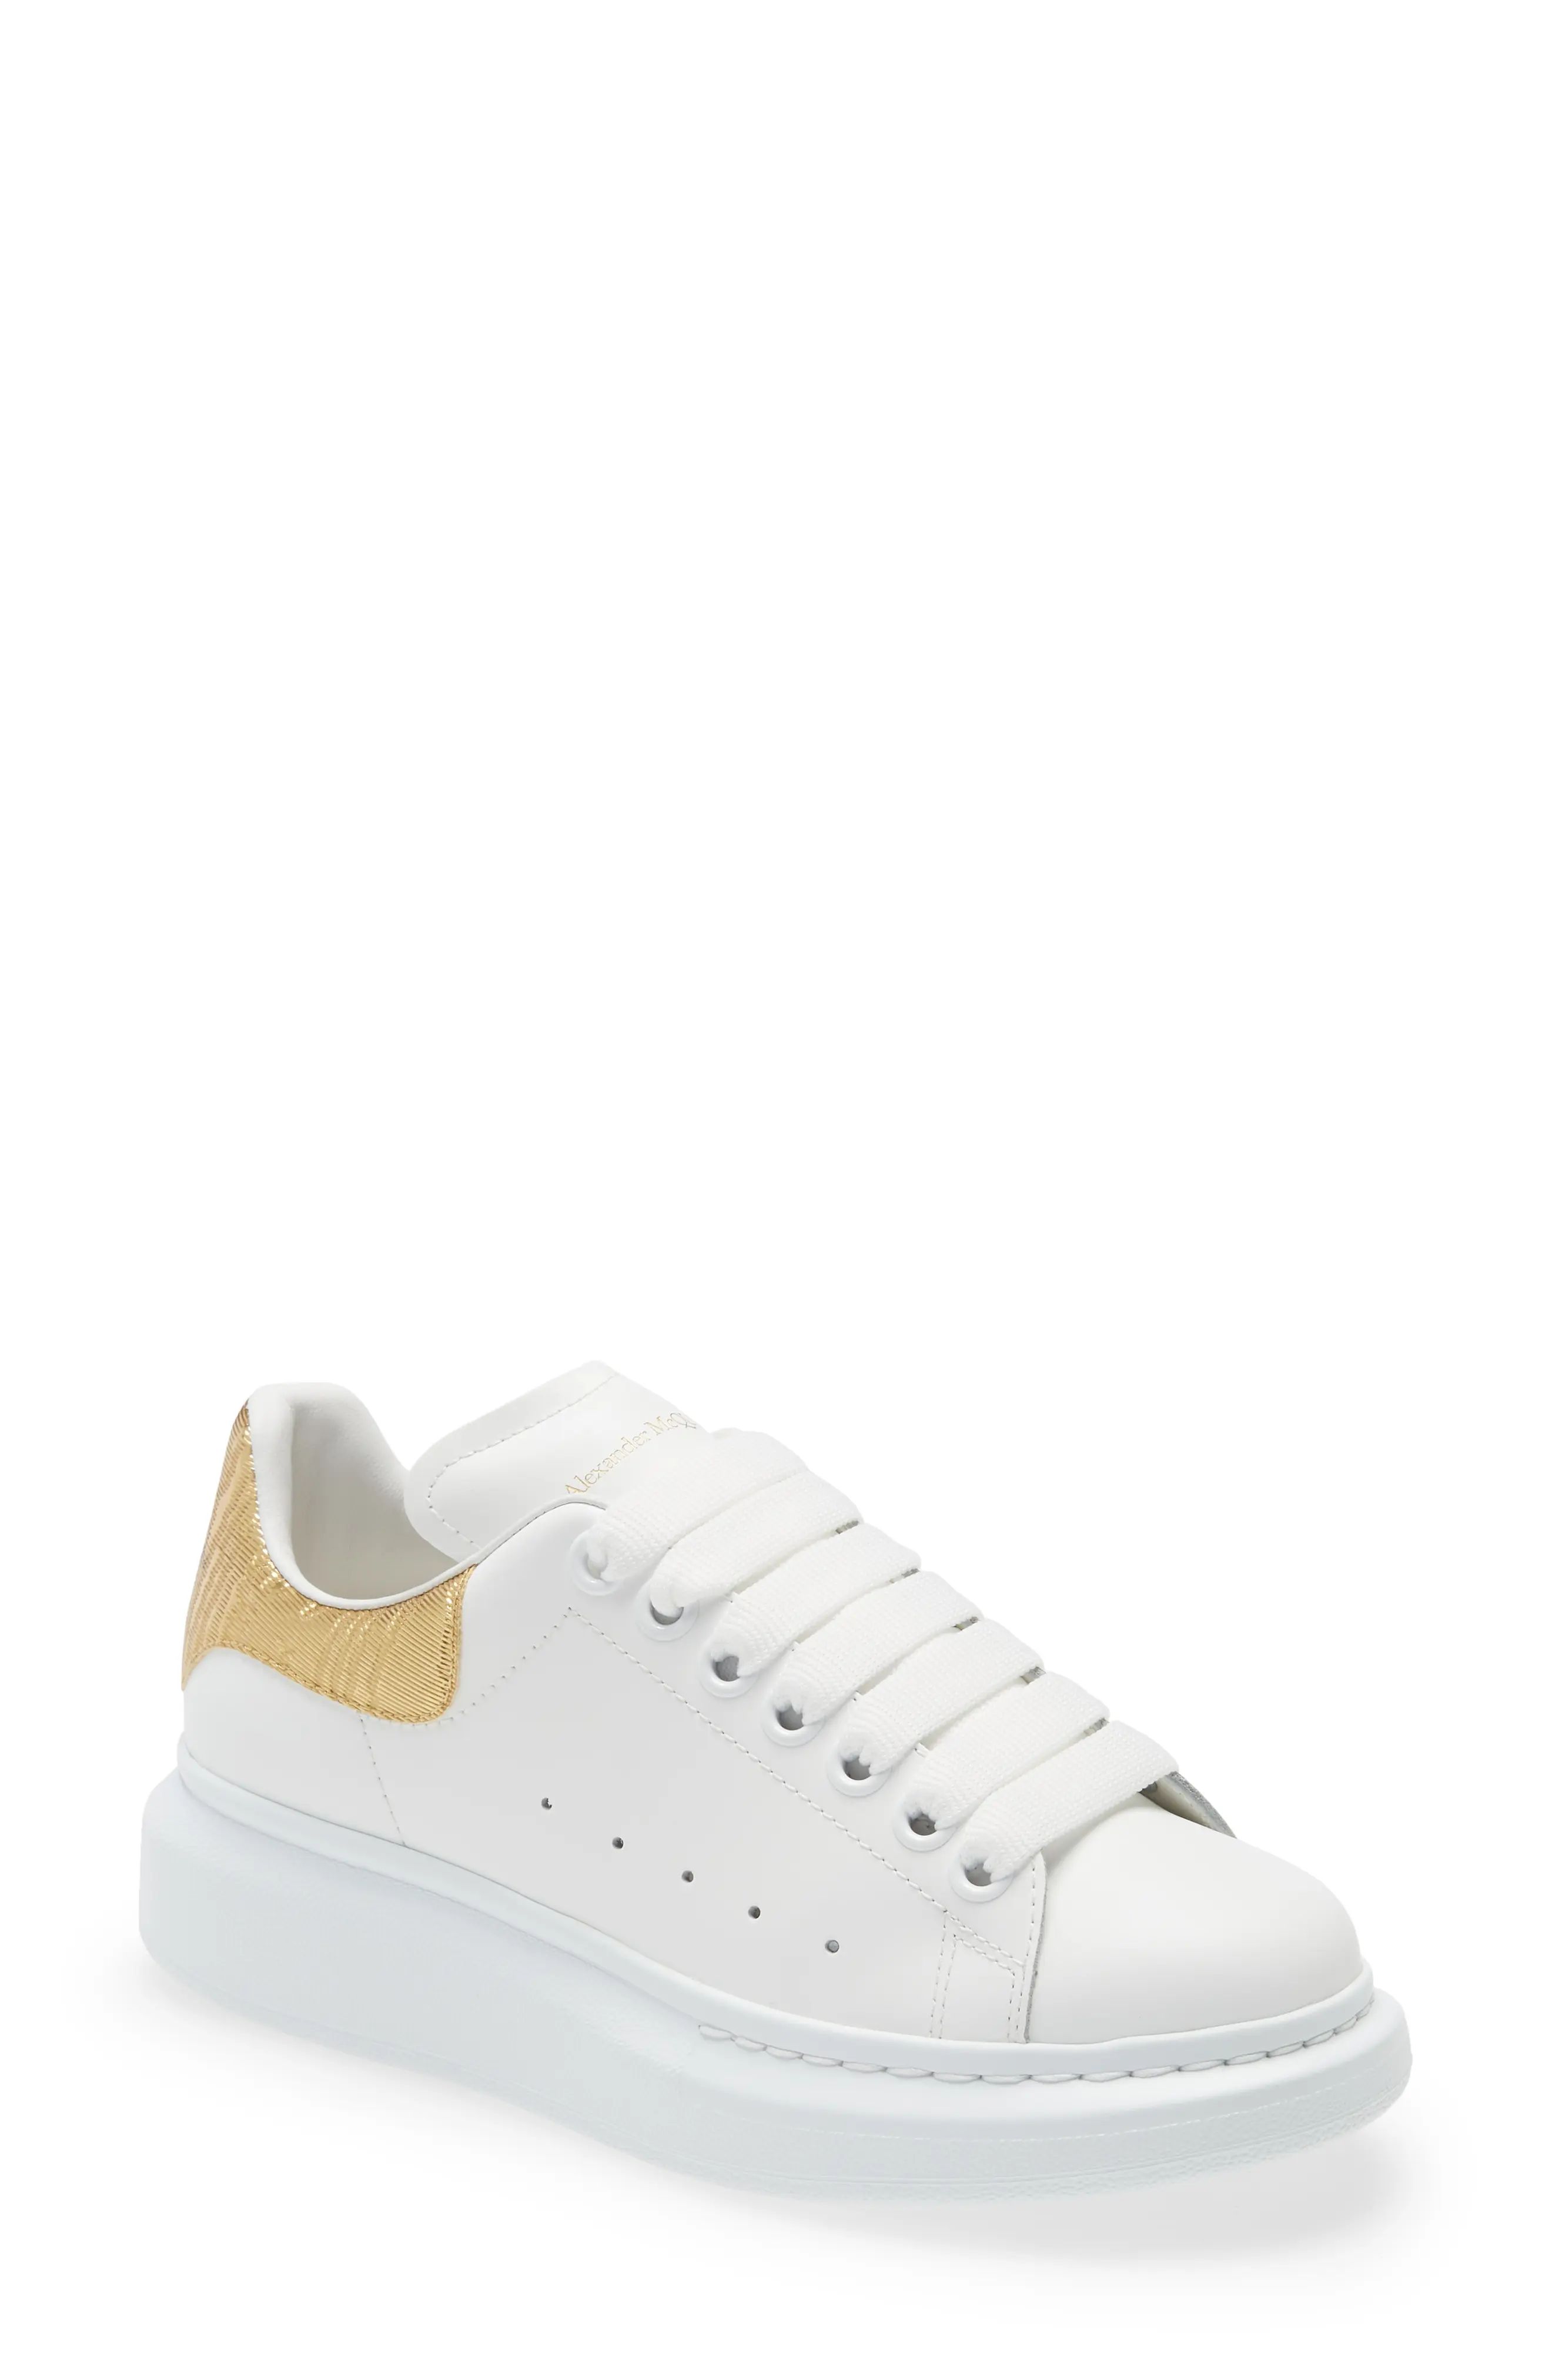 Alexander McQueen Oversize Platform Sneaker in White/Gold at Nordstrom, Size 10.5Us | Nordstrom